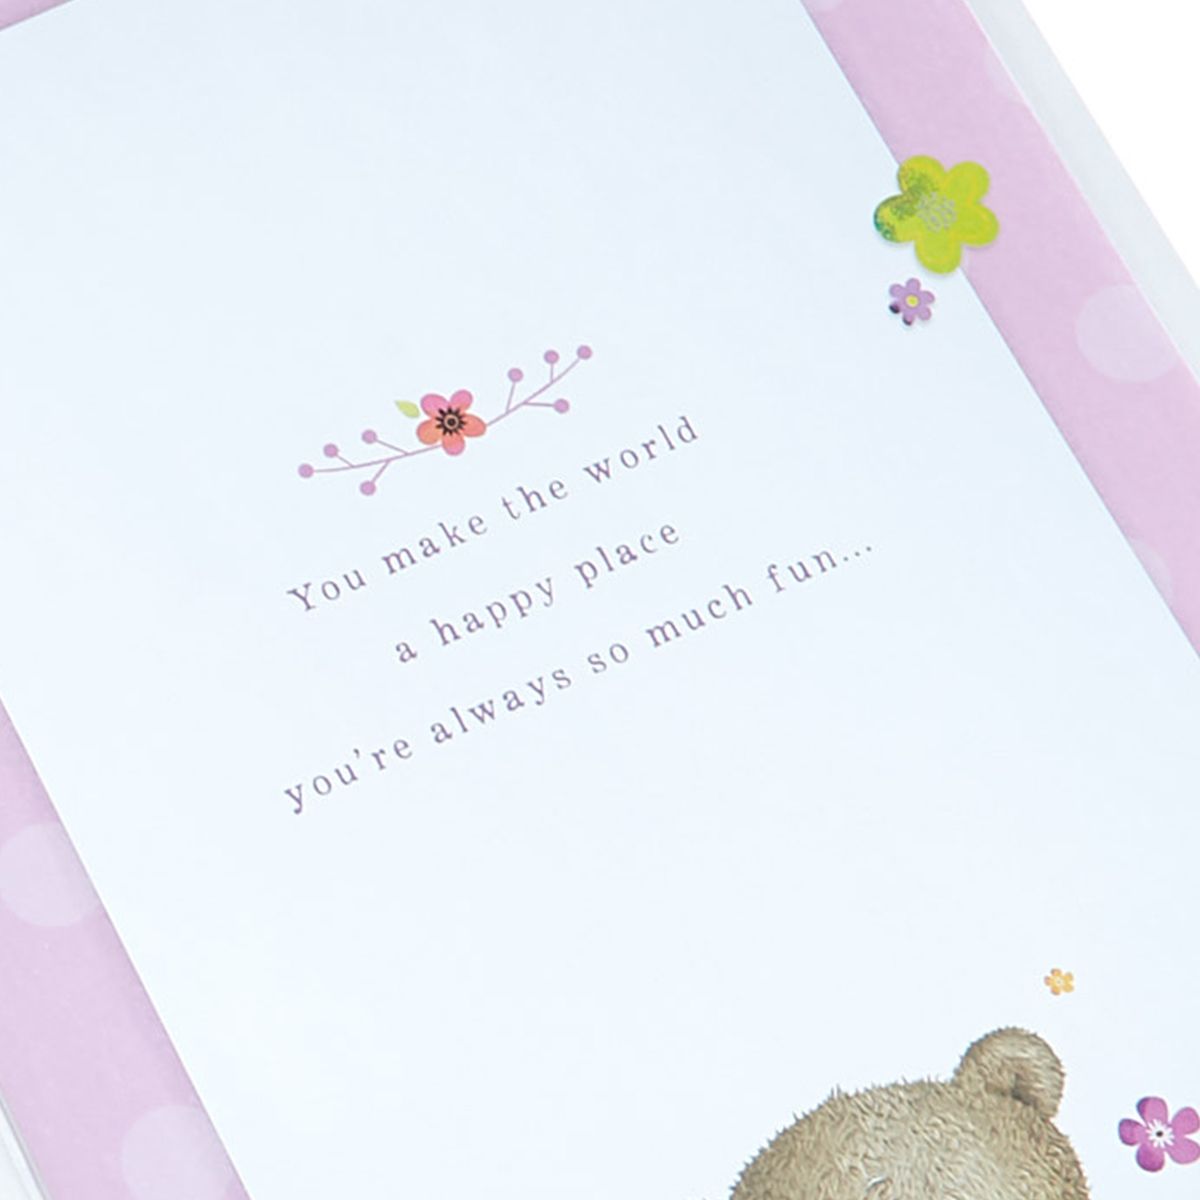 Hugs Bear Birthday Card - Sister, Three Cheers 